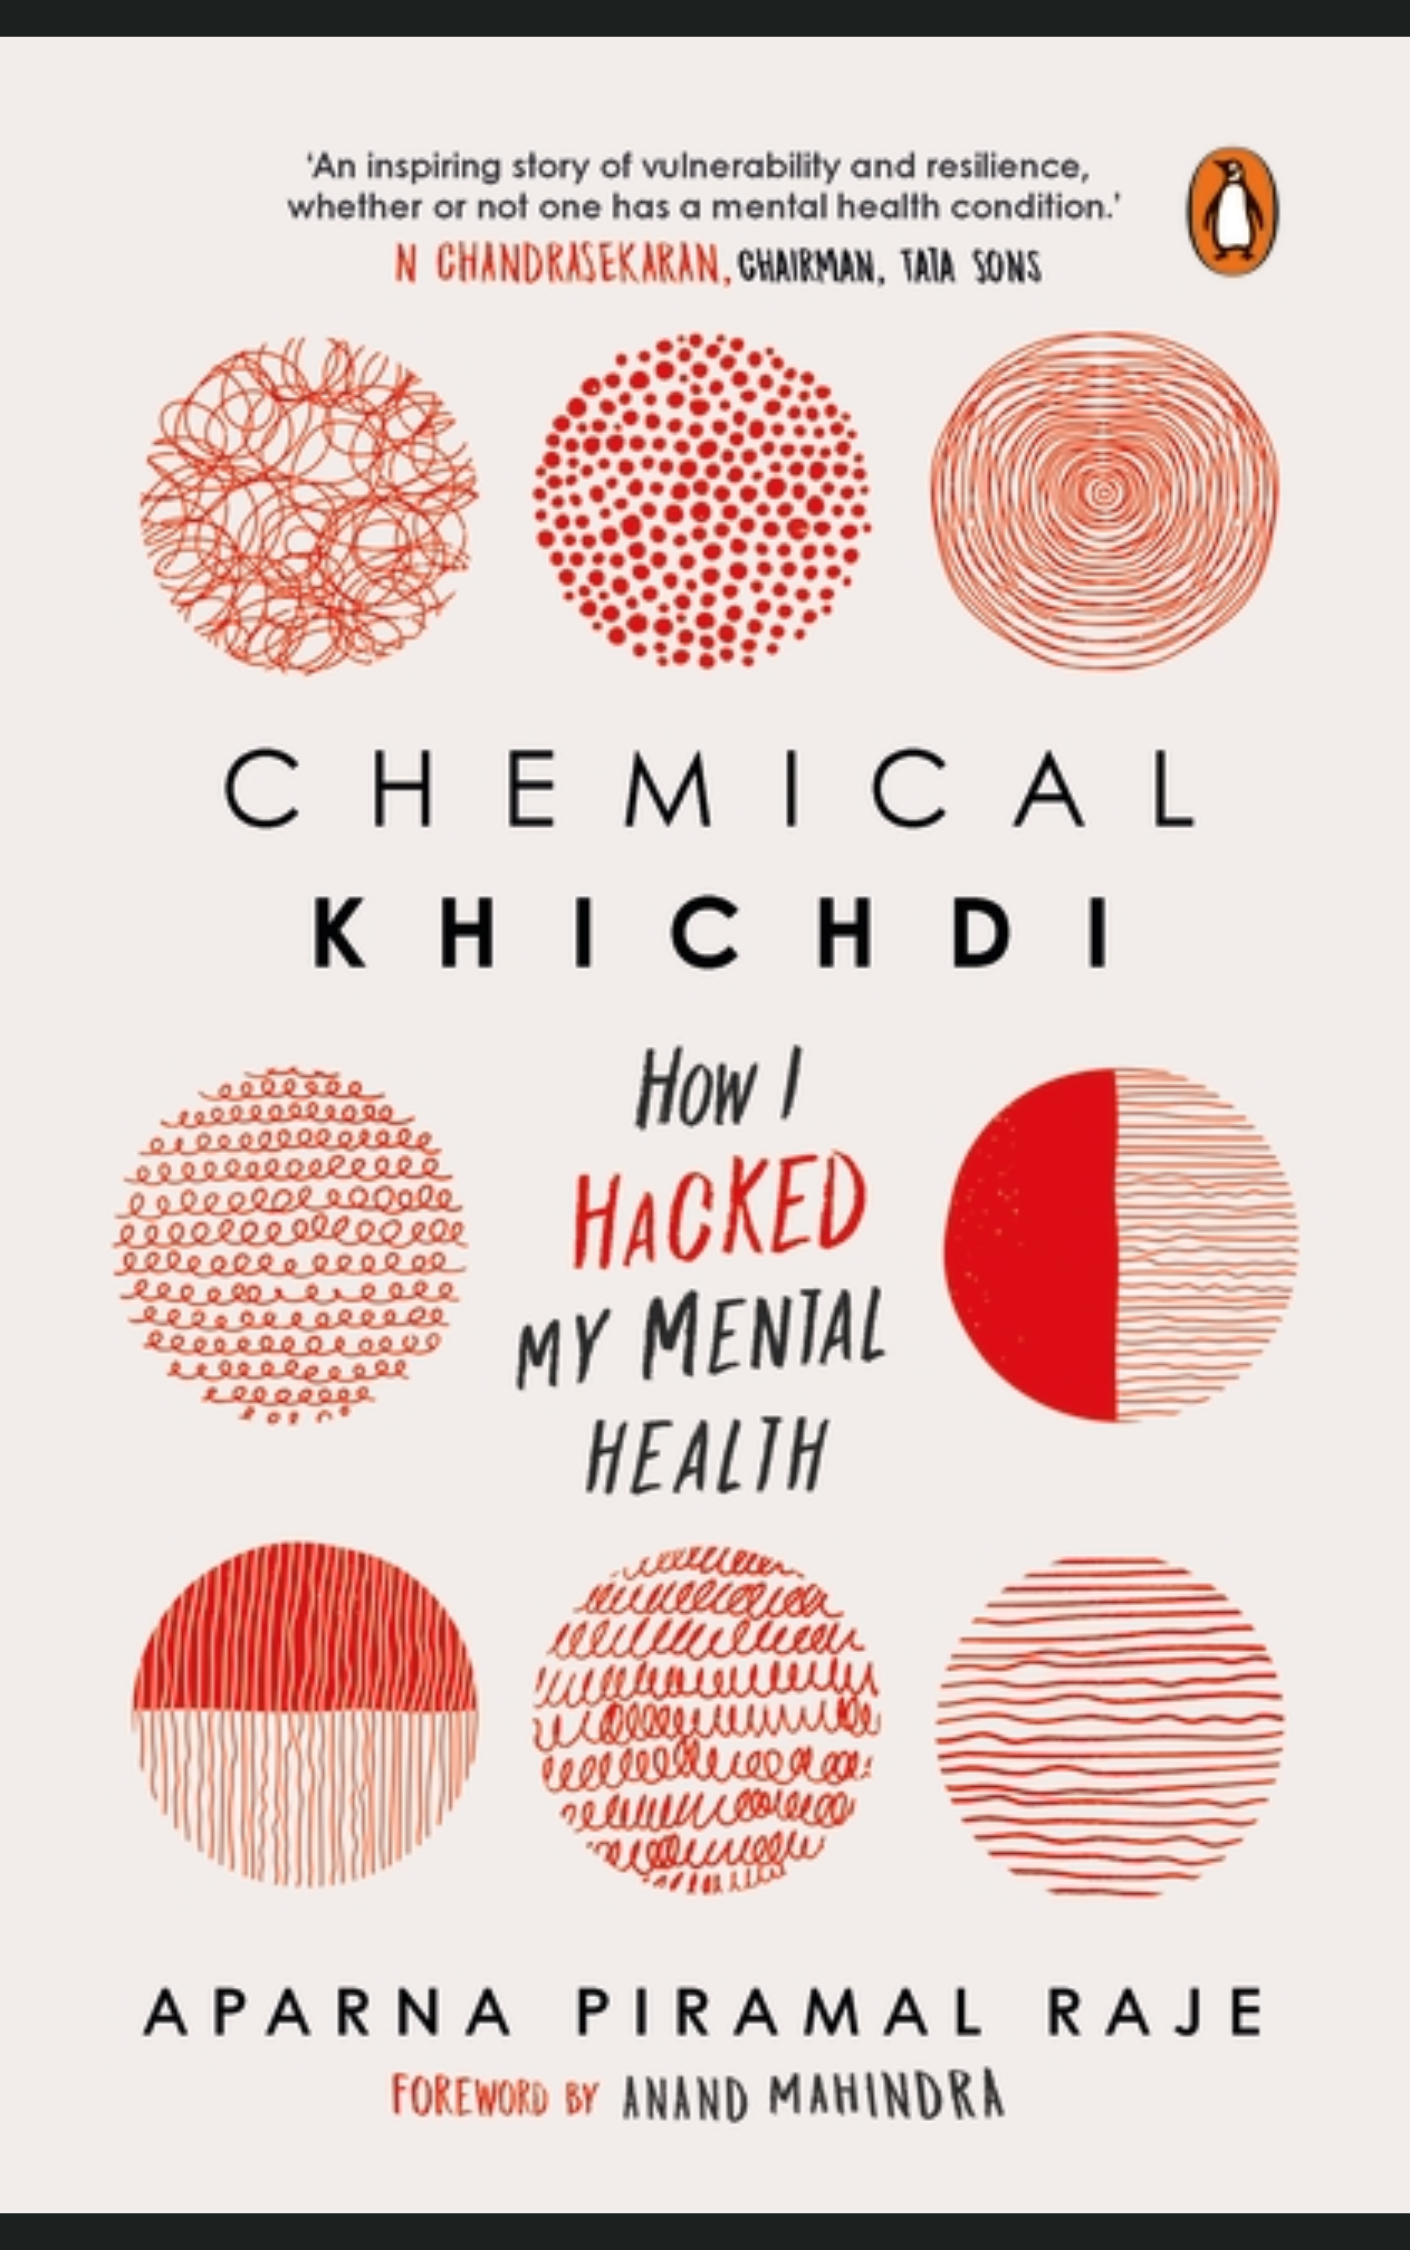 CHEMICAL KHICHDI by APARNA PIRAMAL RAJE